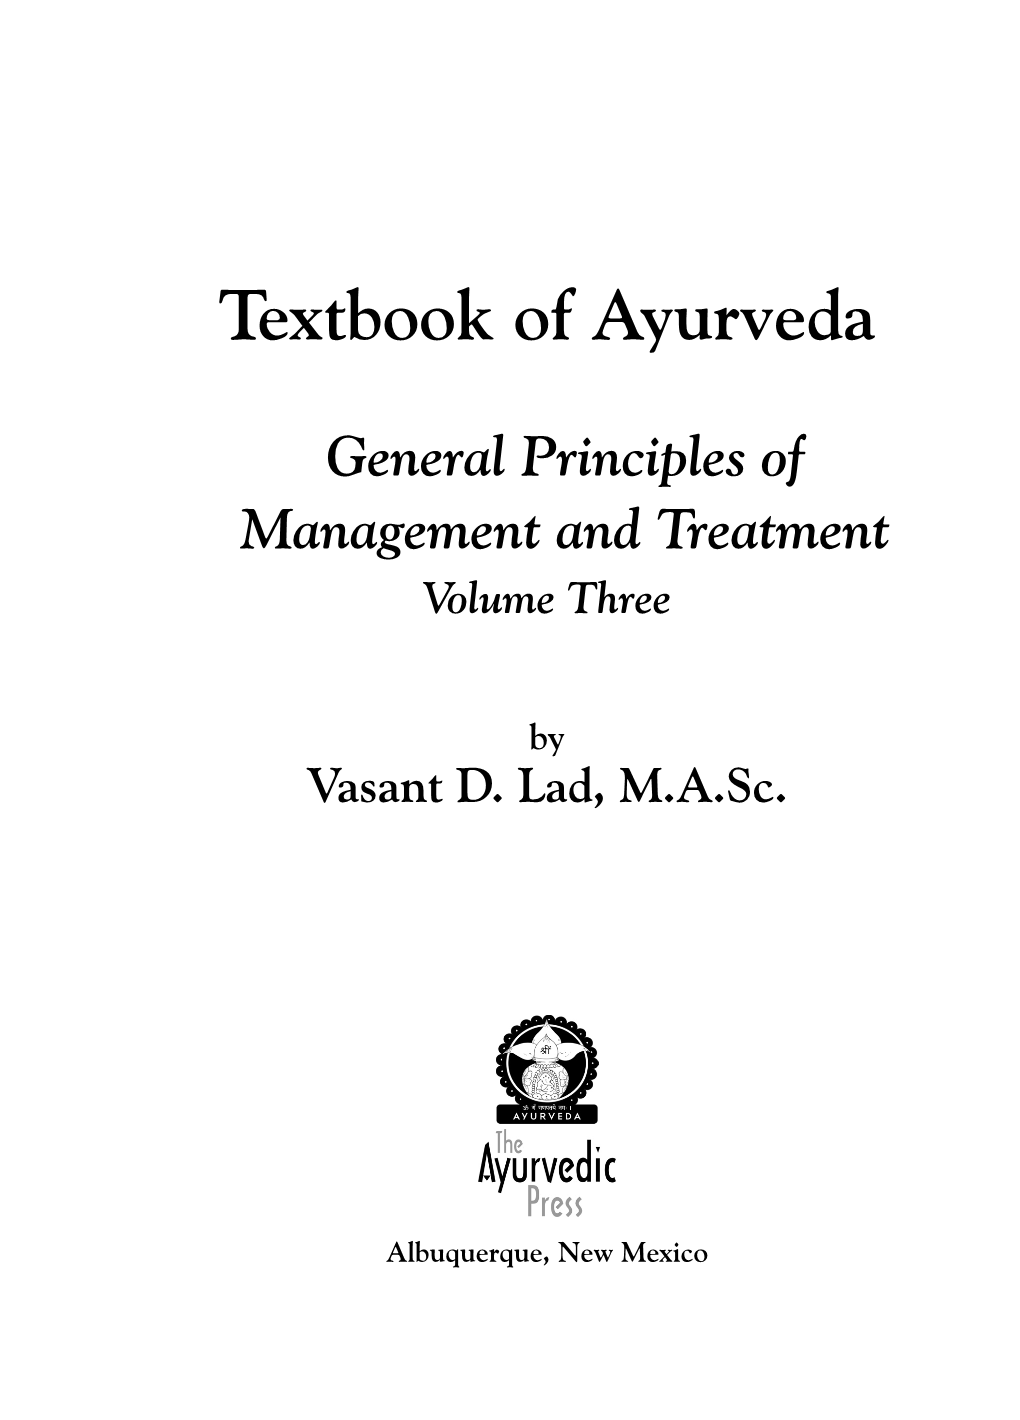 Textbook of Ayurveda: Volume 3